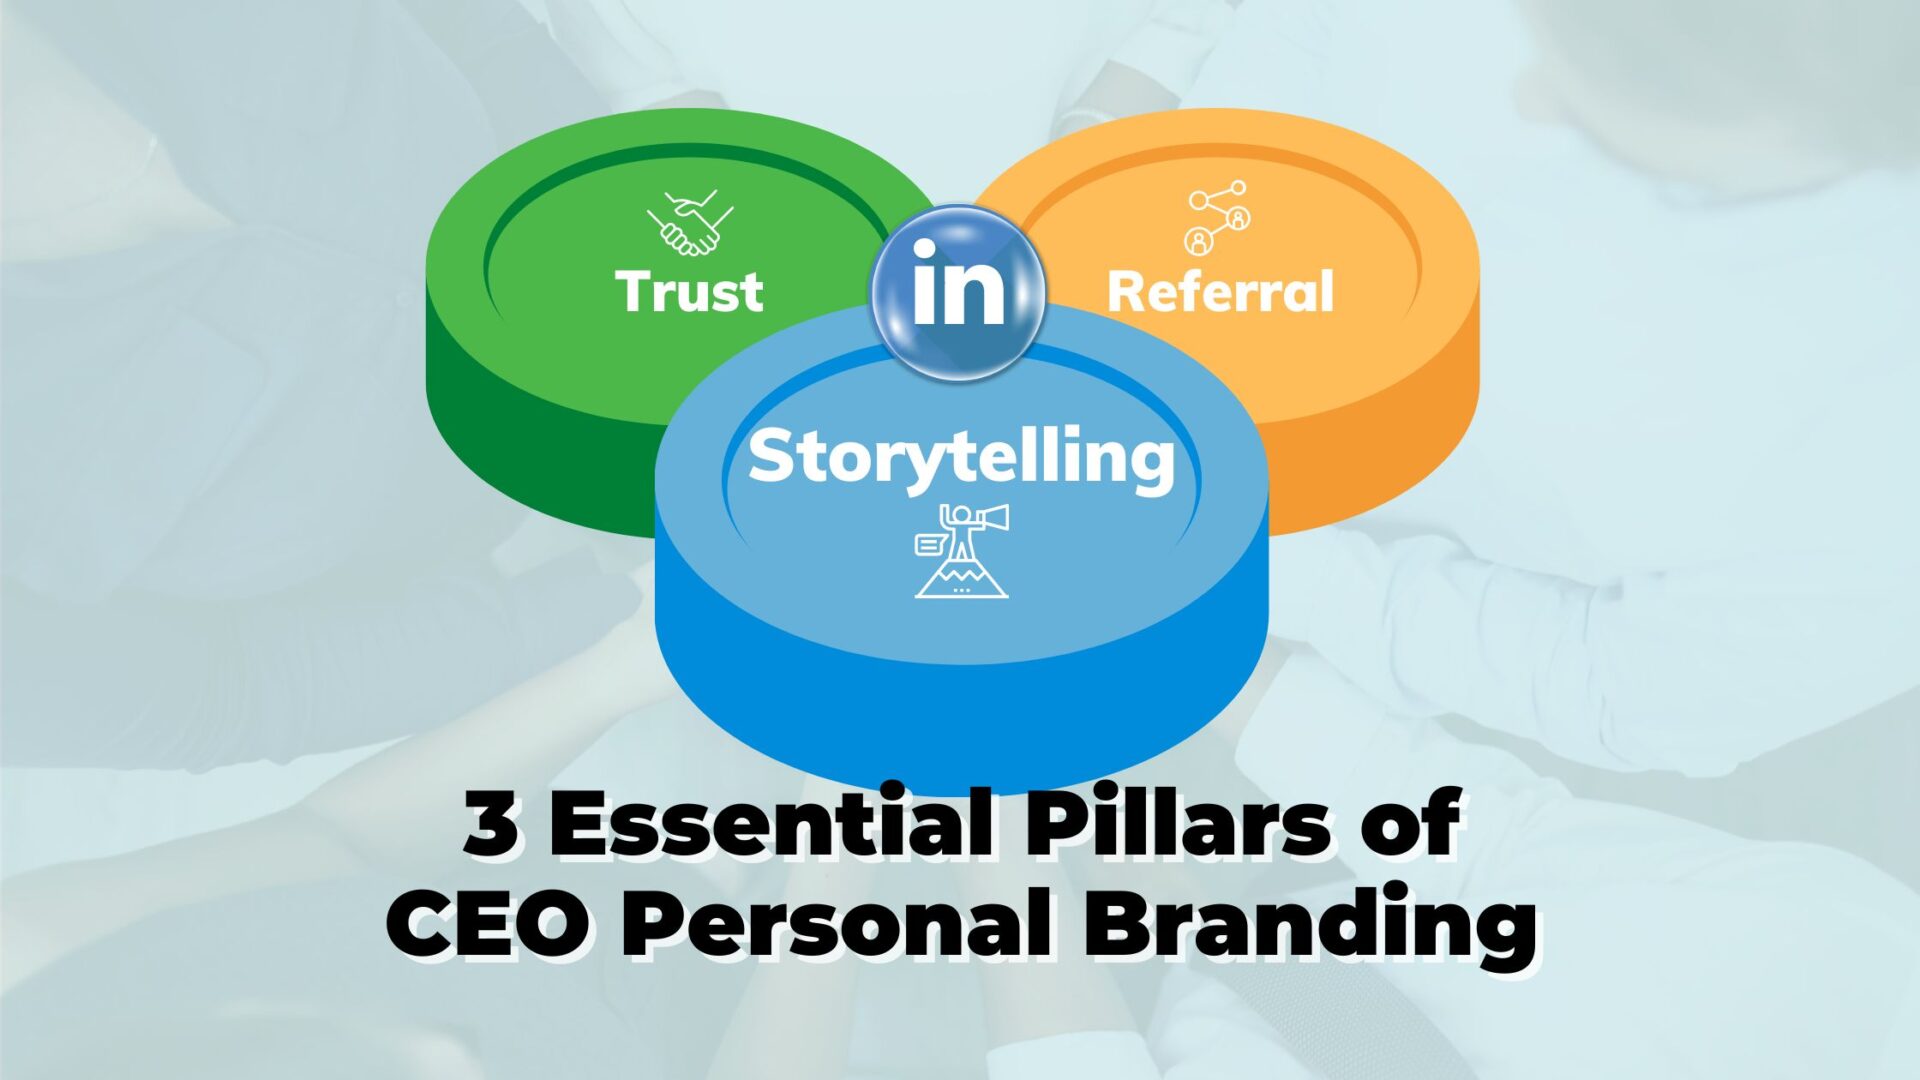 3 Essential Pillars of CEO Personal Branding: Storytelling, Referrals & Trust